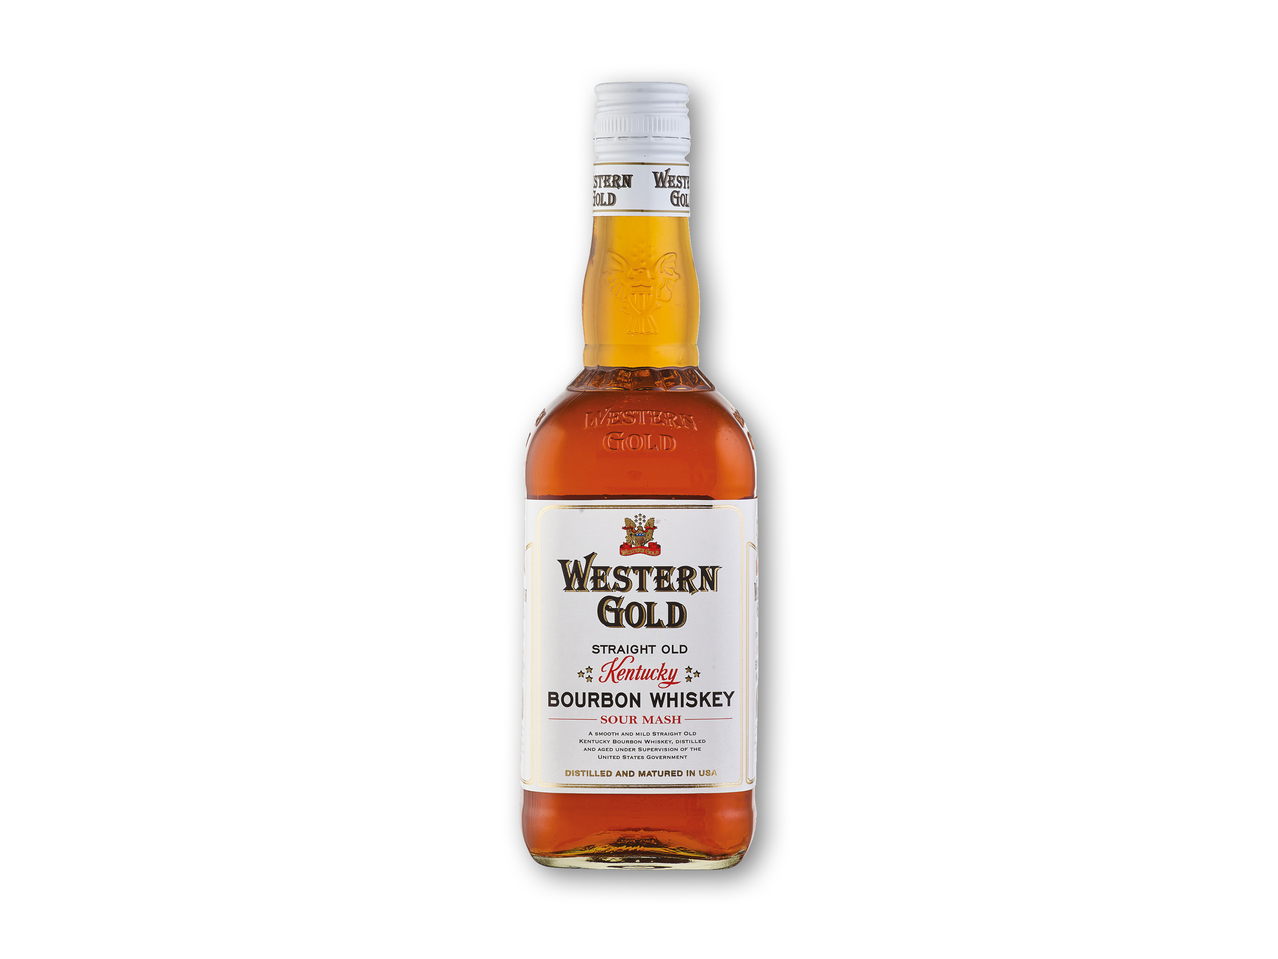 WESTERN GOLD Bourbon whiskey1